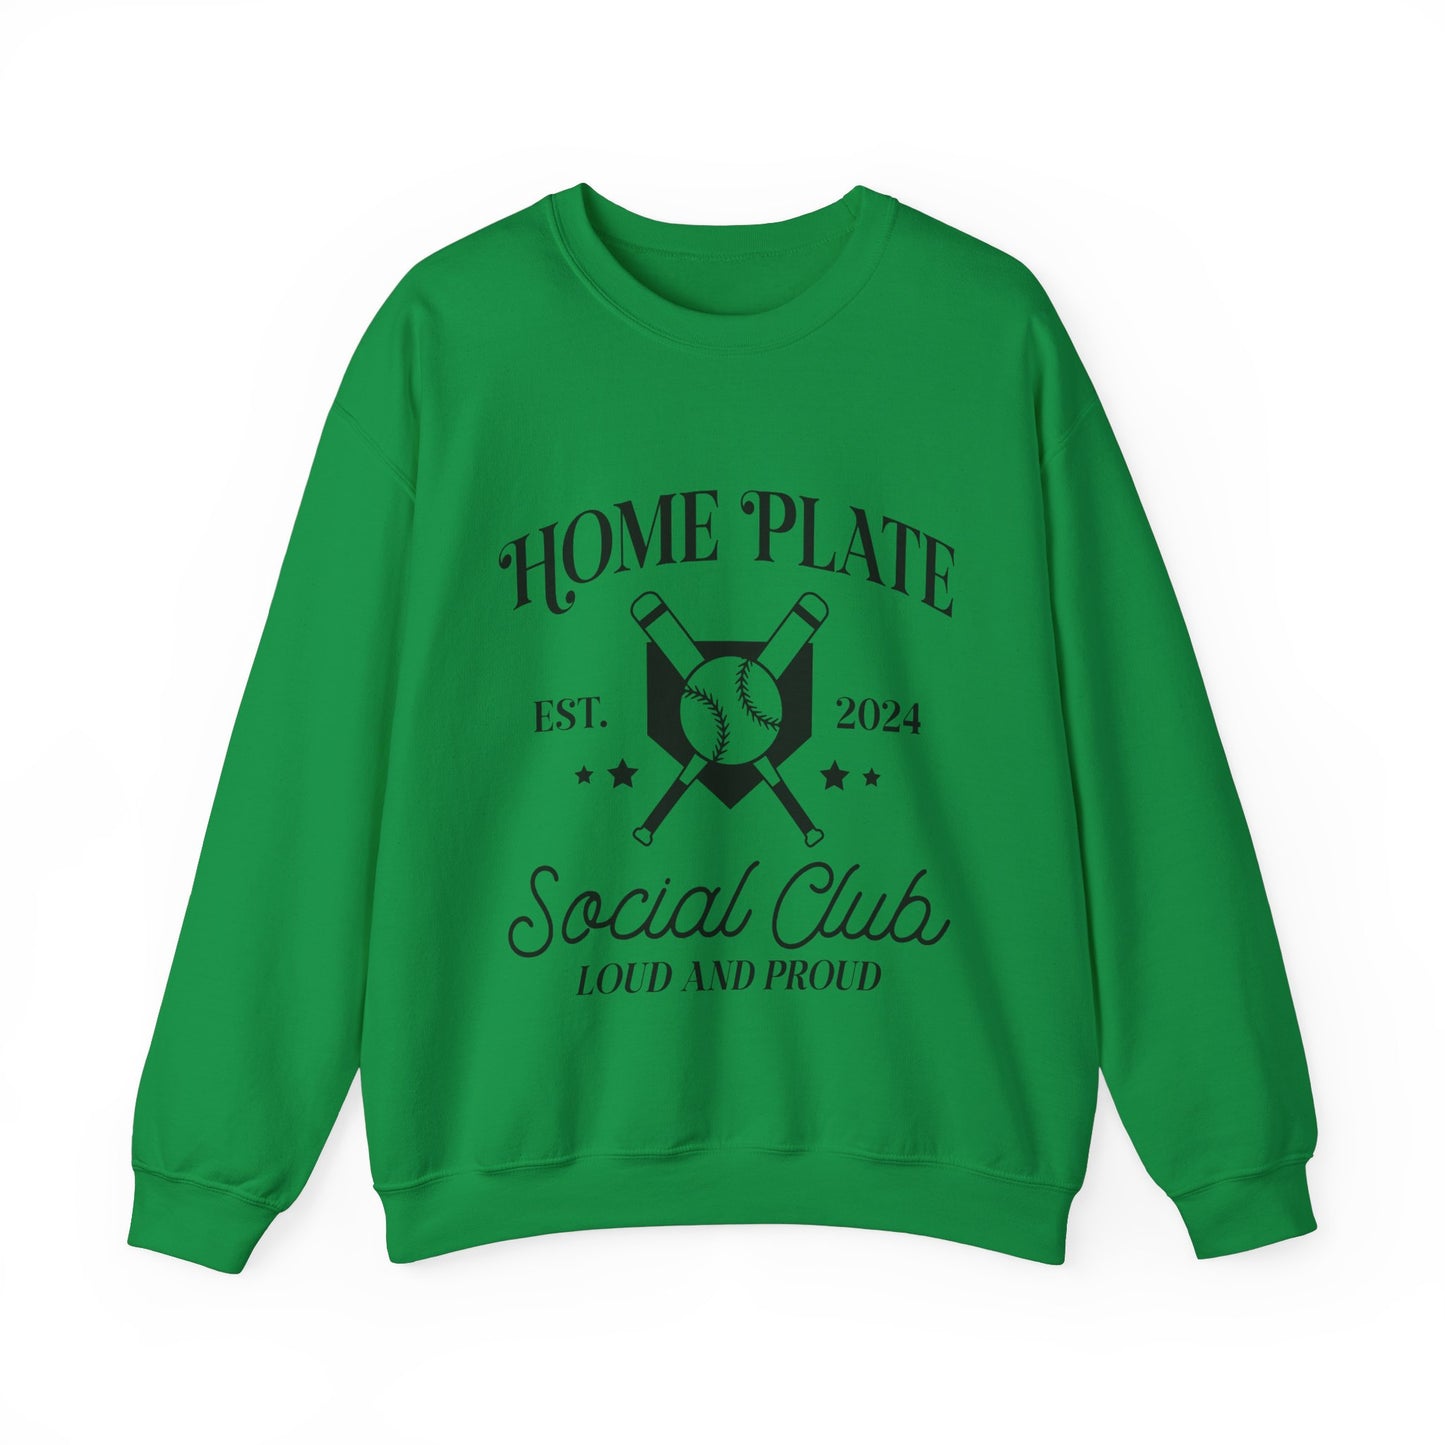 Home Plate Social Club Women's Crewneck Sweatshirt Baseball Softball Tball